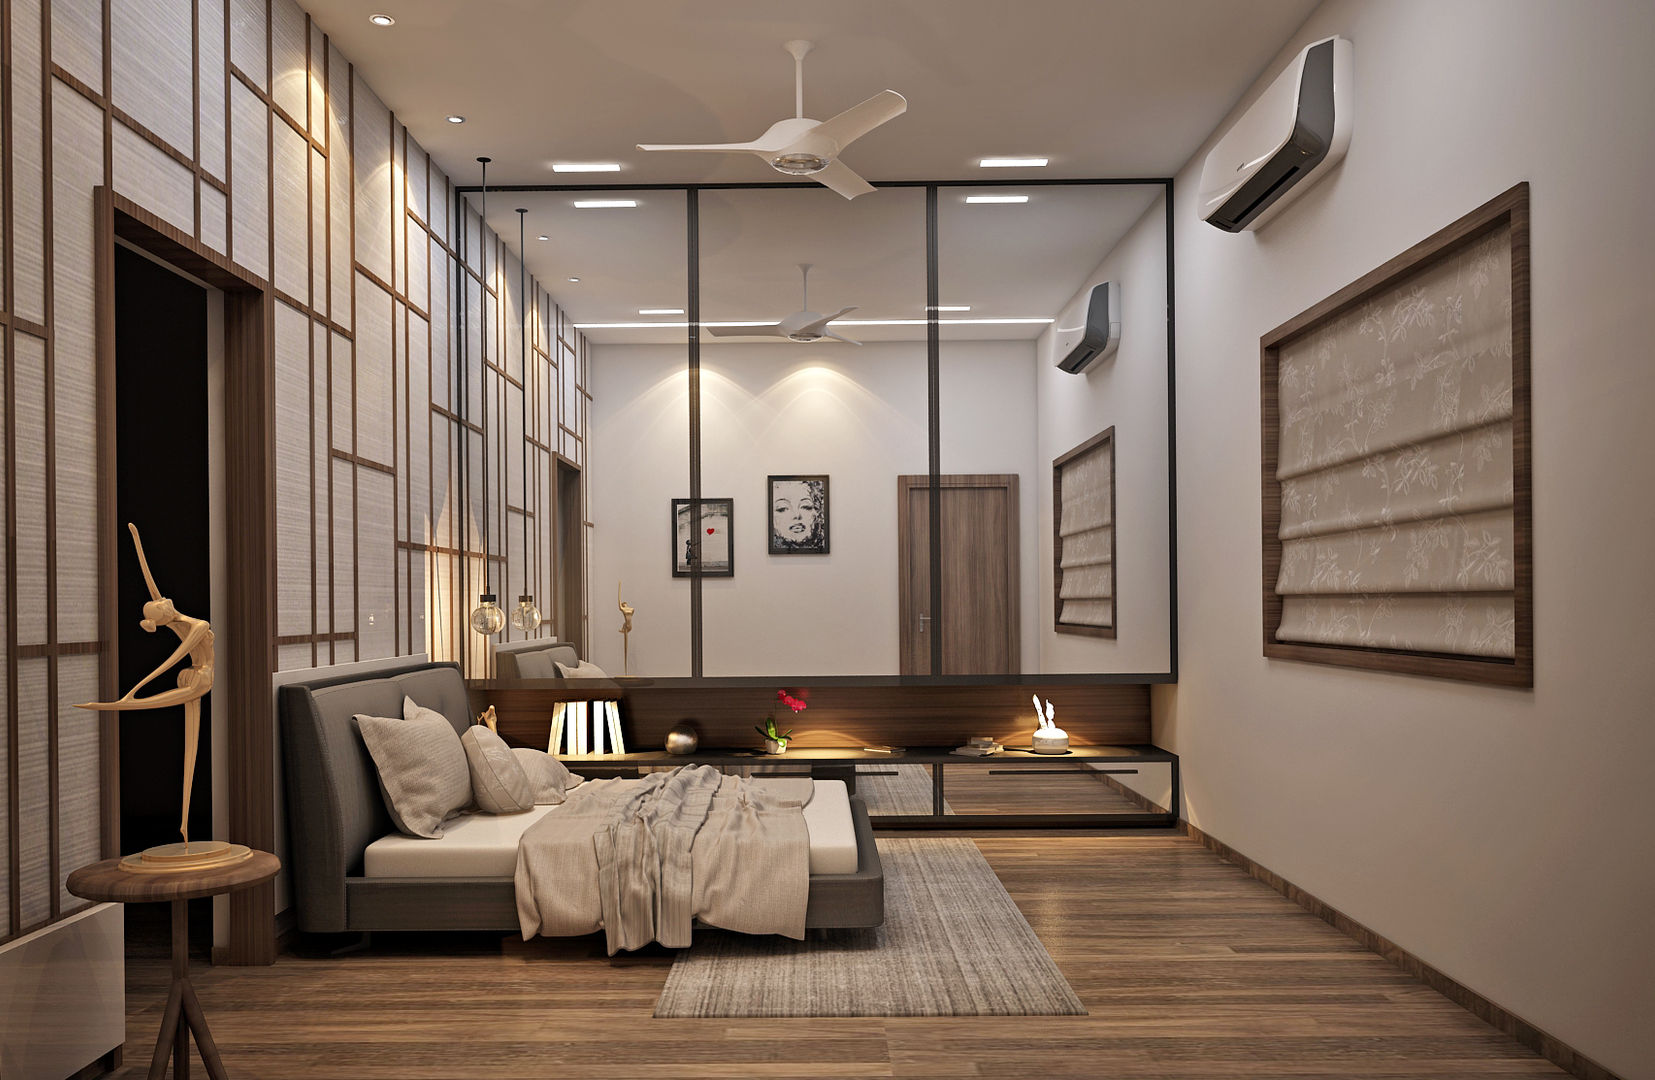 Bedroom Design Ideas Inside Element Modern style bedroom